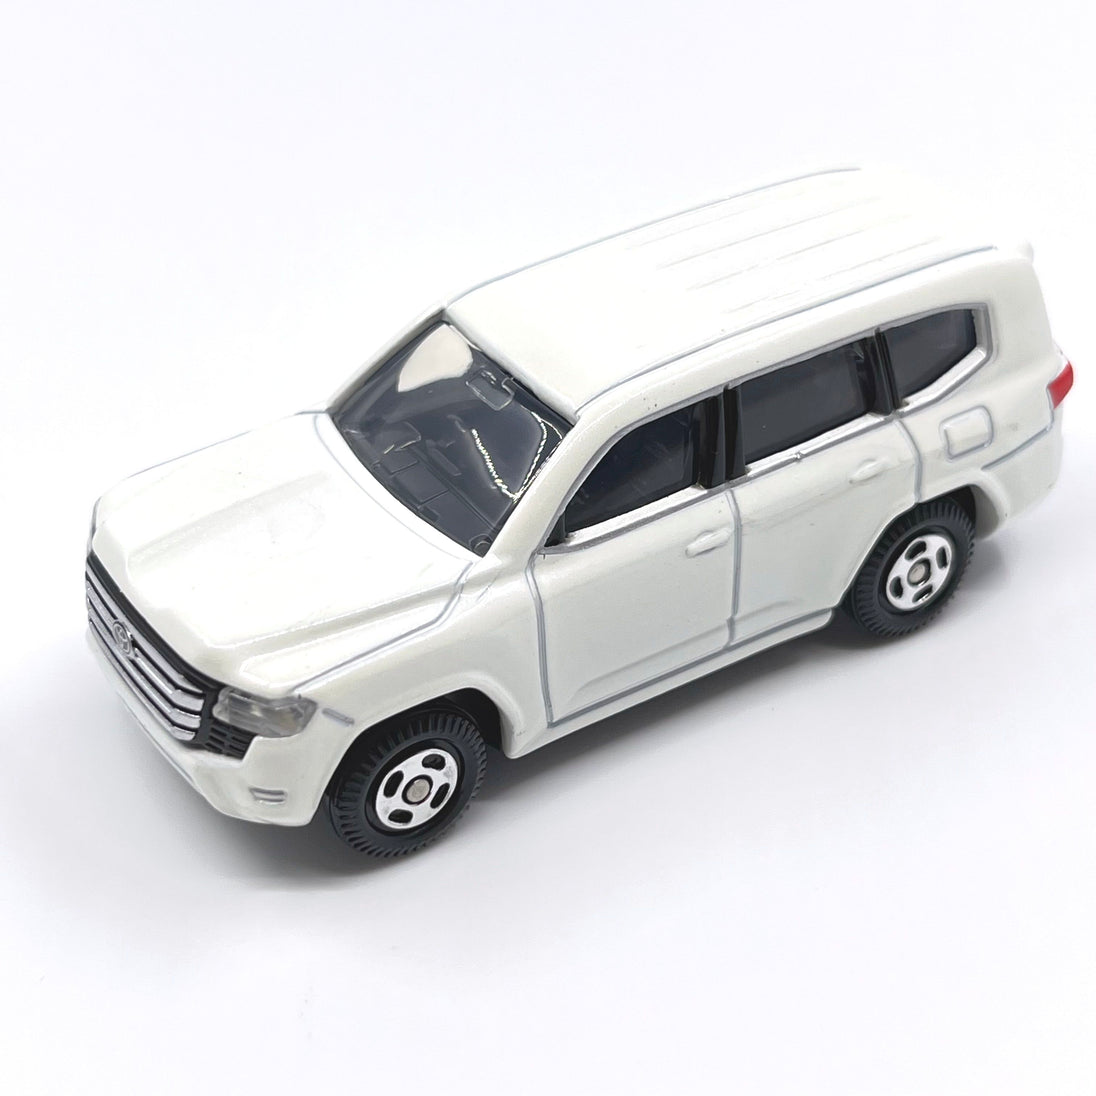 1:66 Toyota Land Cruiser Tomica Diecast Car Model by Takara Tomy